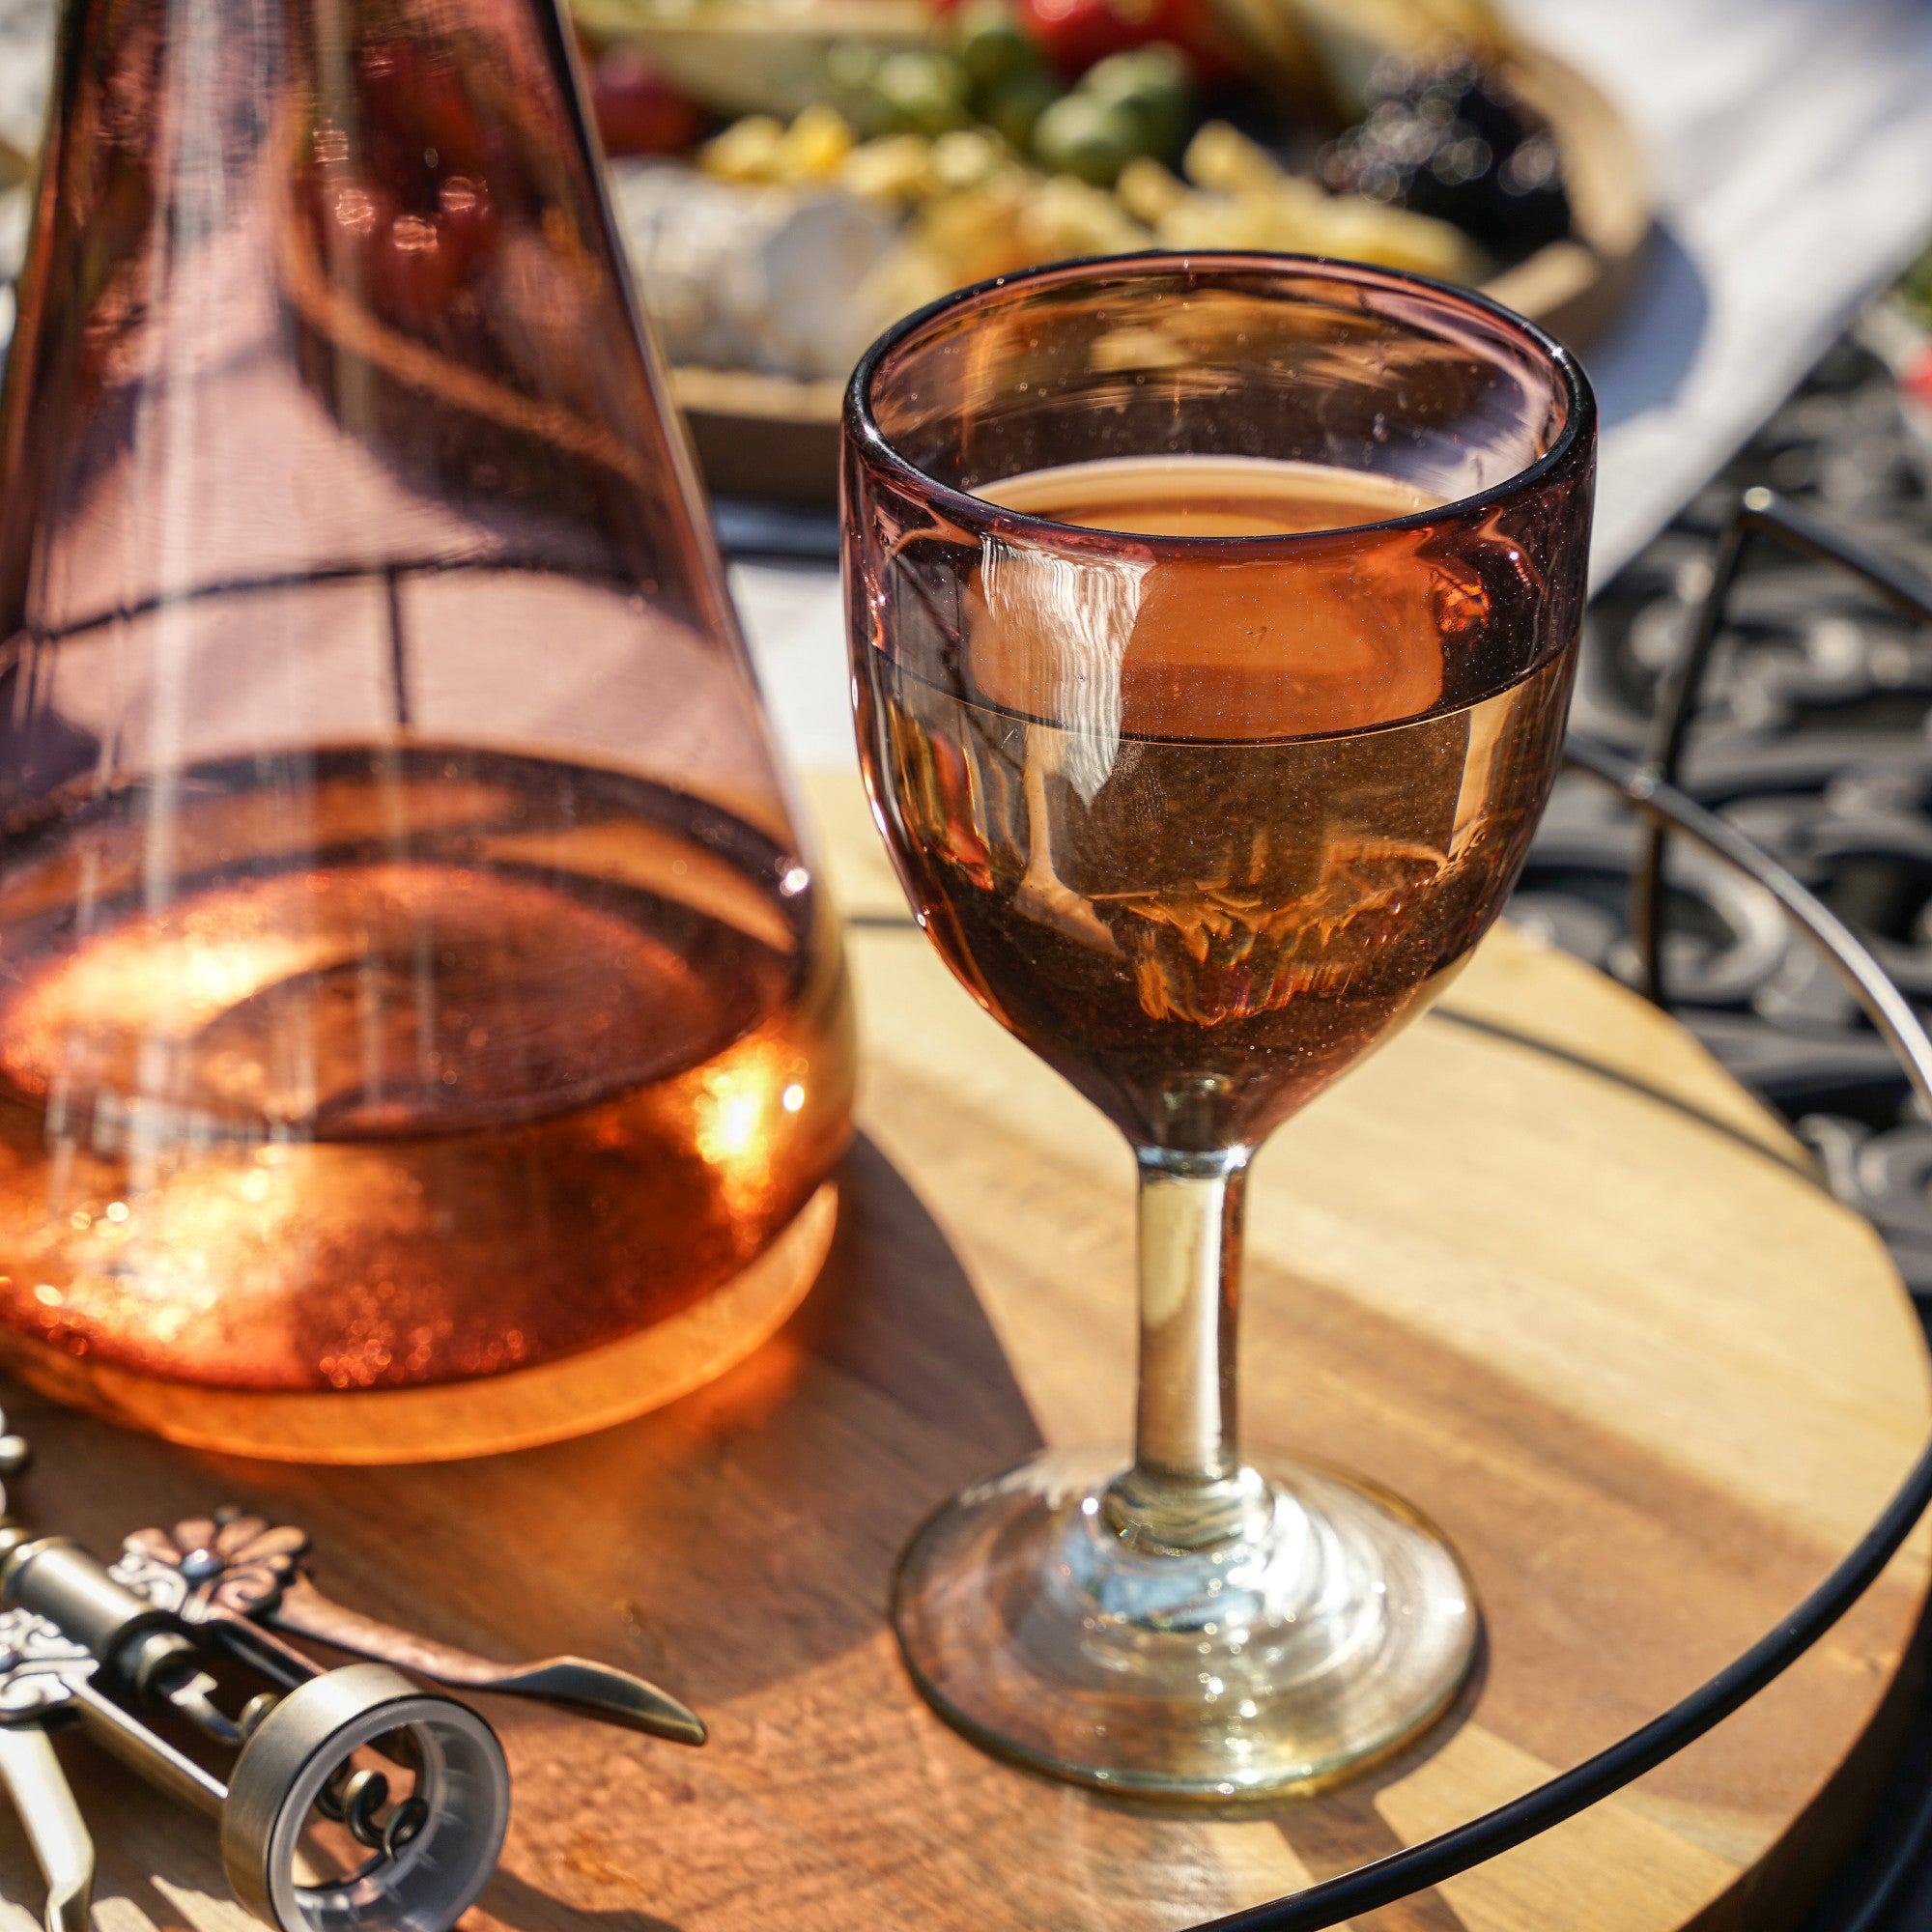 Twine Luster Stemless Wine Glass Set